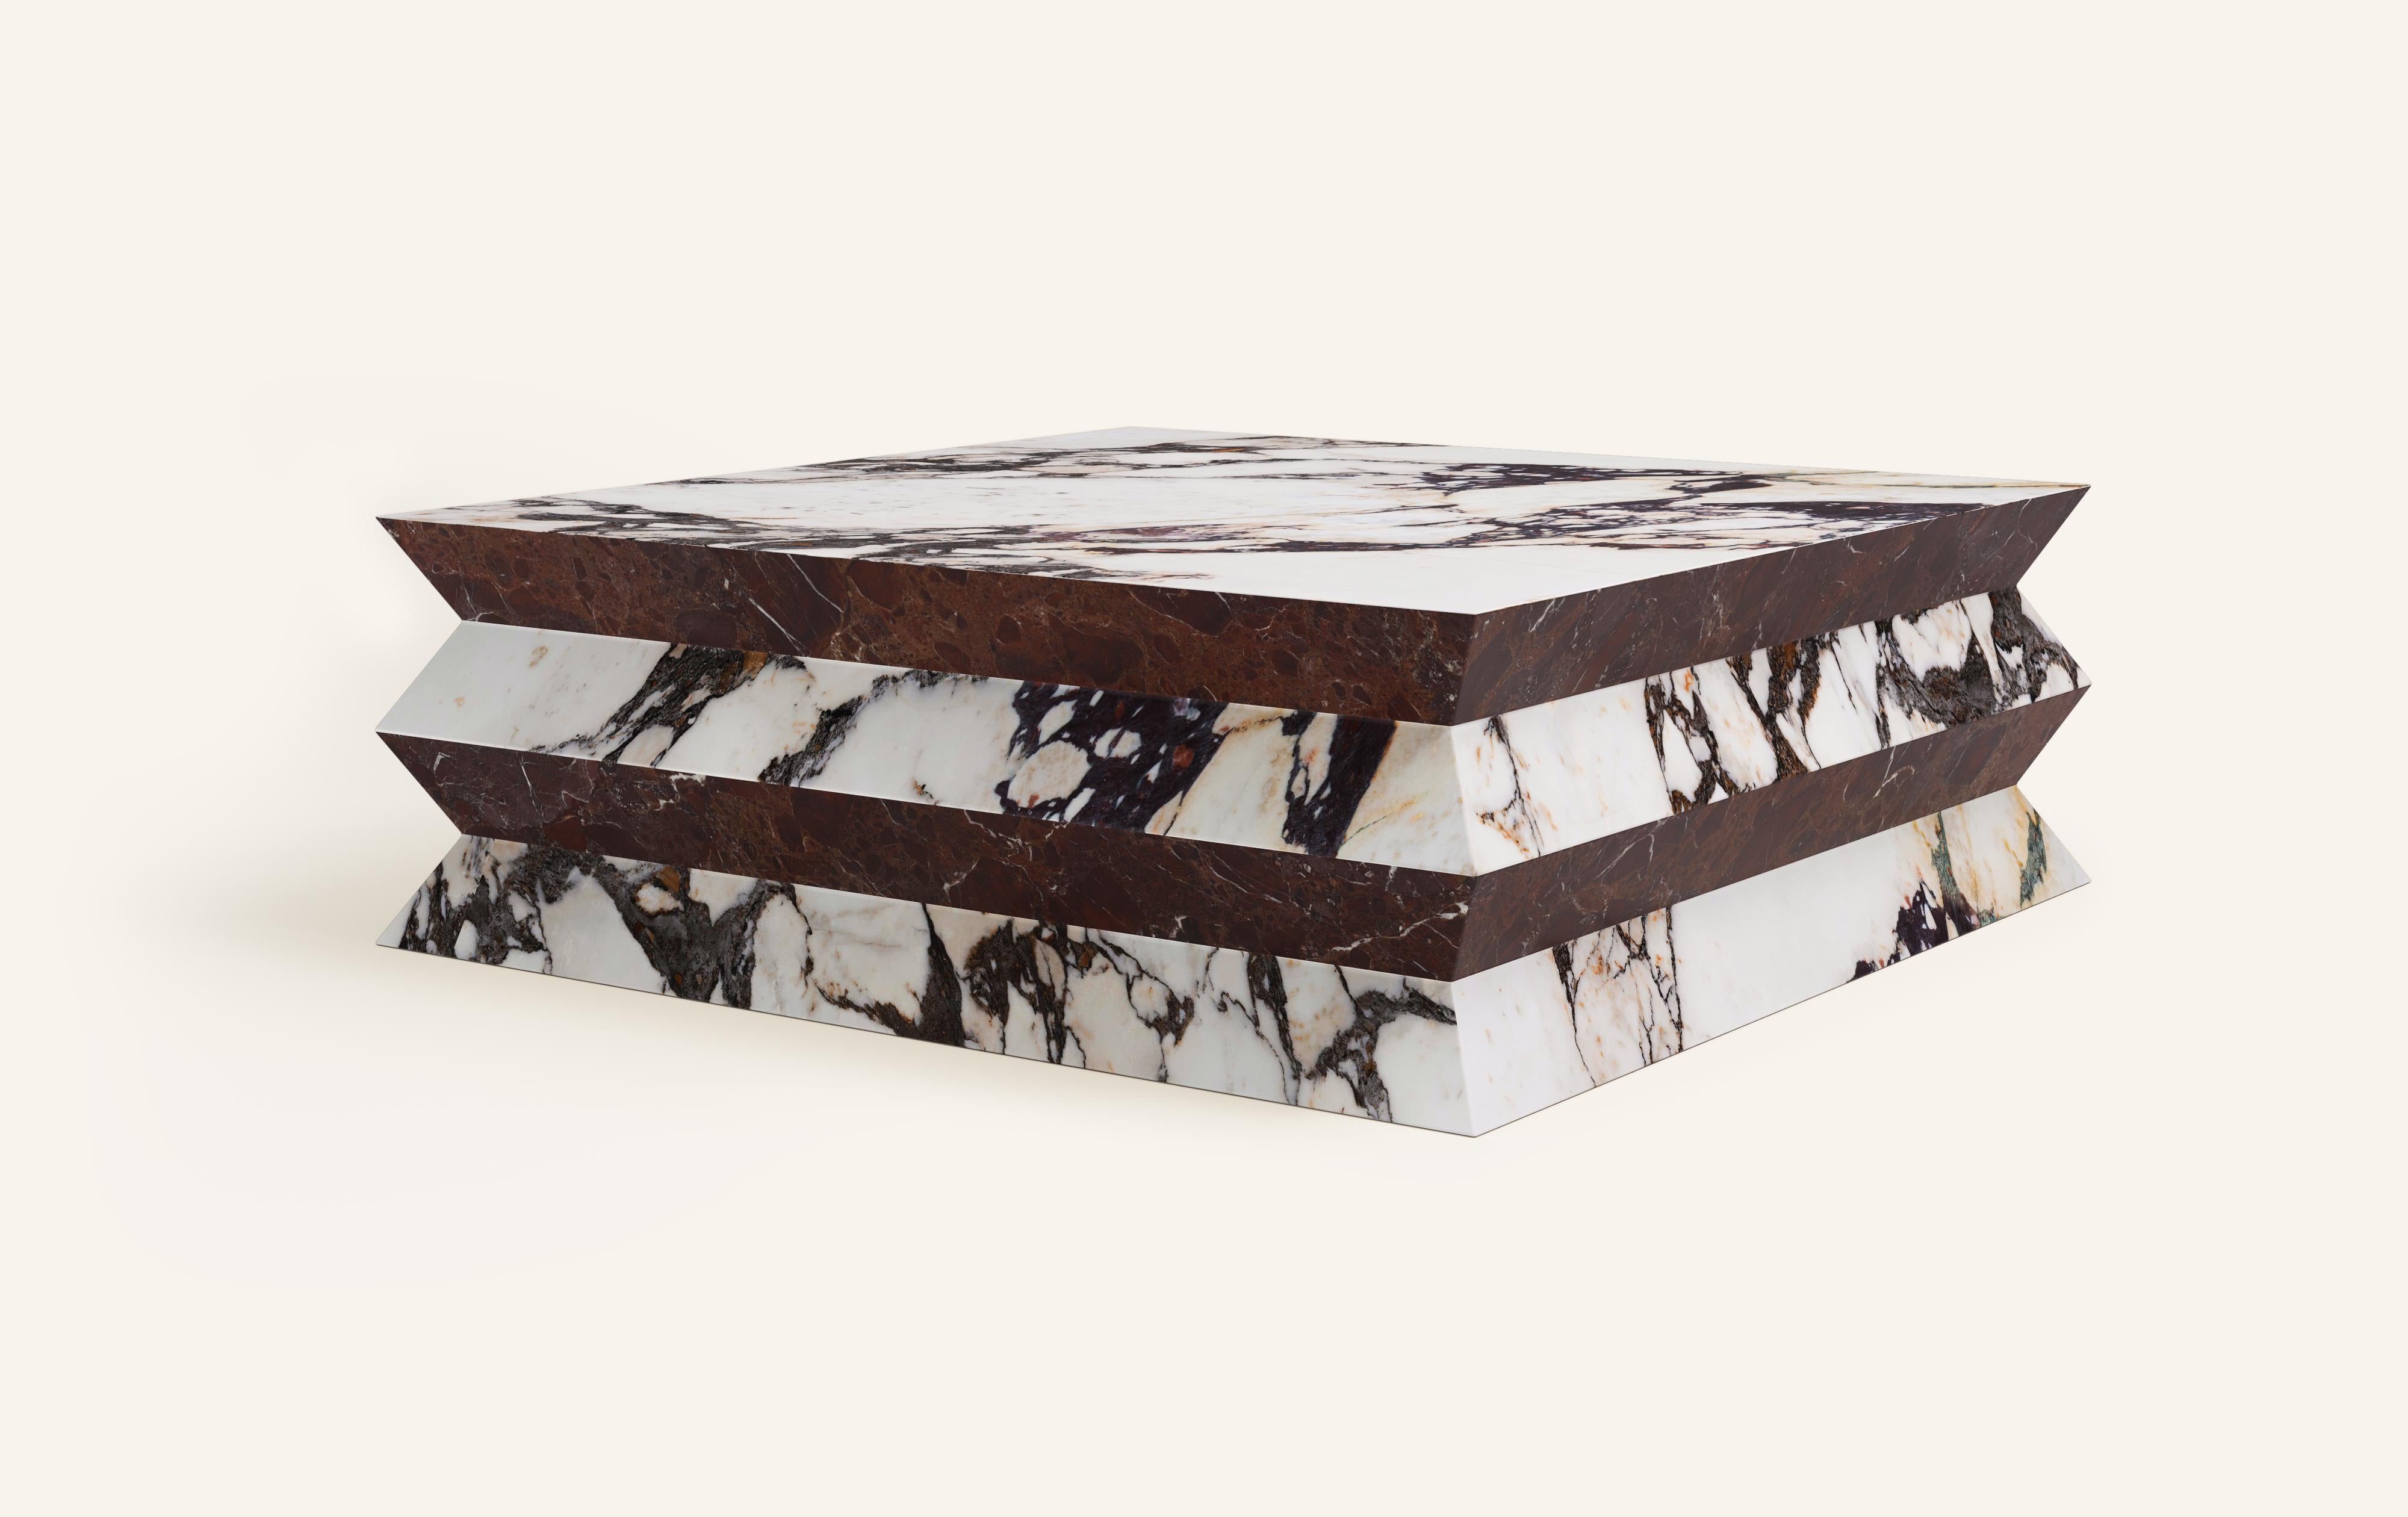 Organique FORM(LA) table basse carrée Grinza 60 po. (L) x 60 po. (L) x 16 po. (H) marbre Calacatta Viola en vente